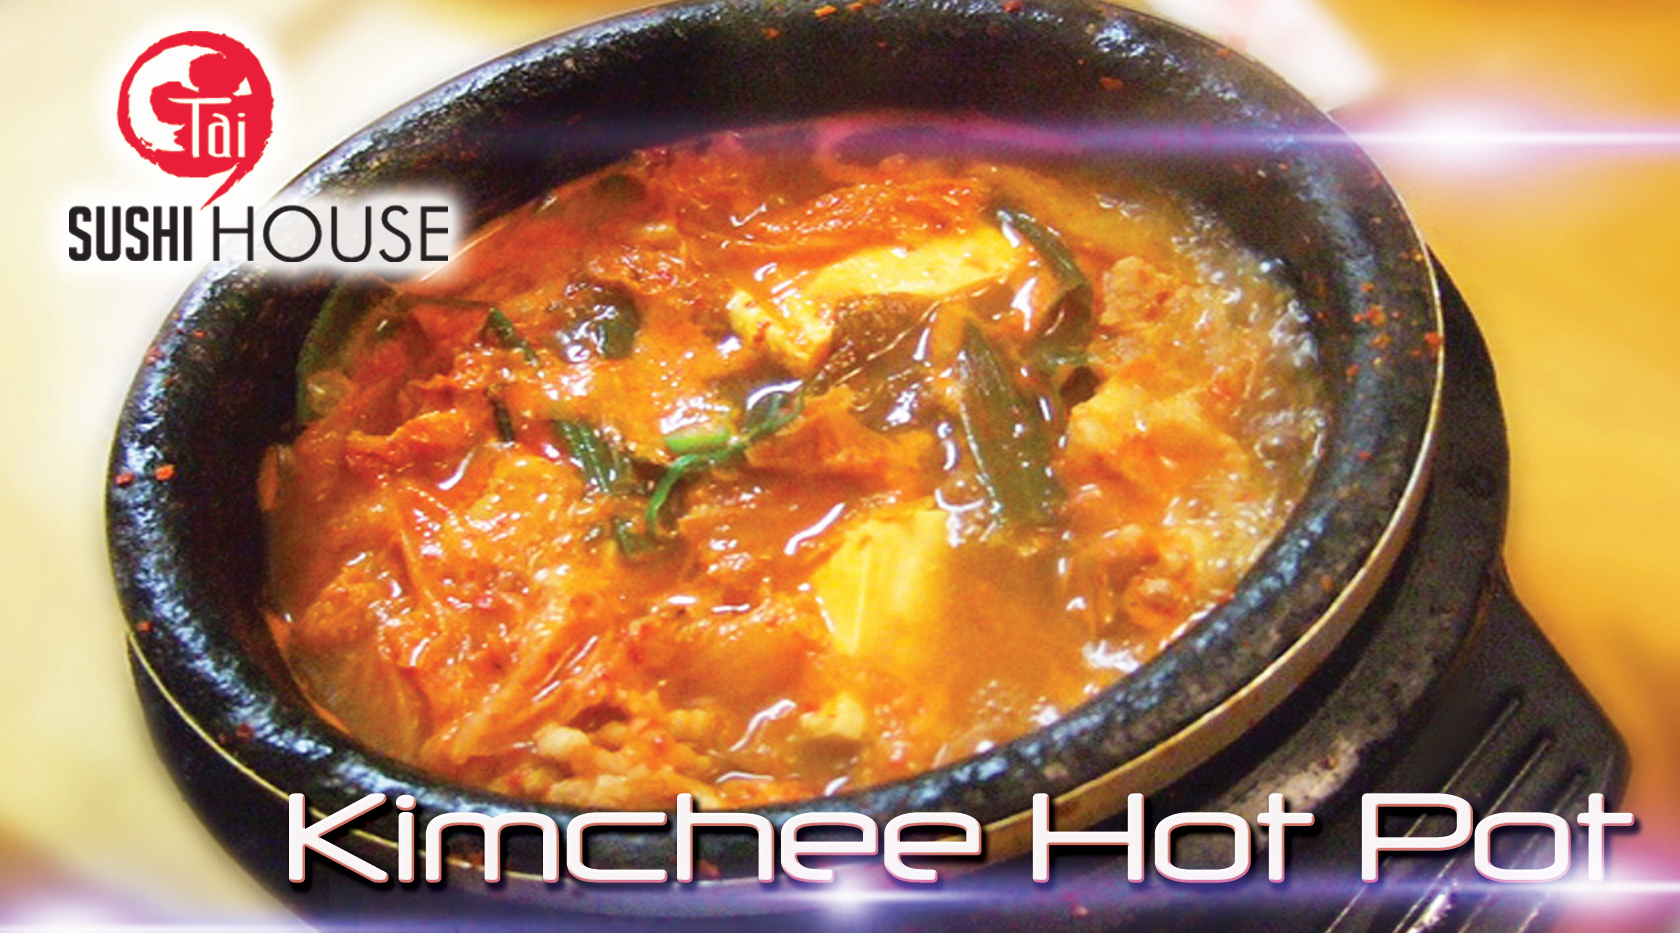 Kimchee Hot Pot